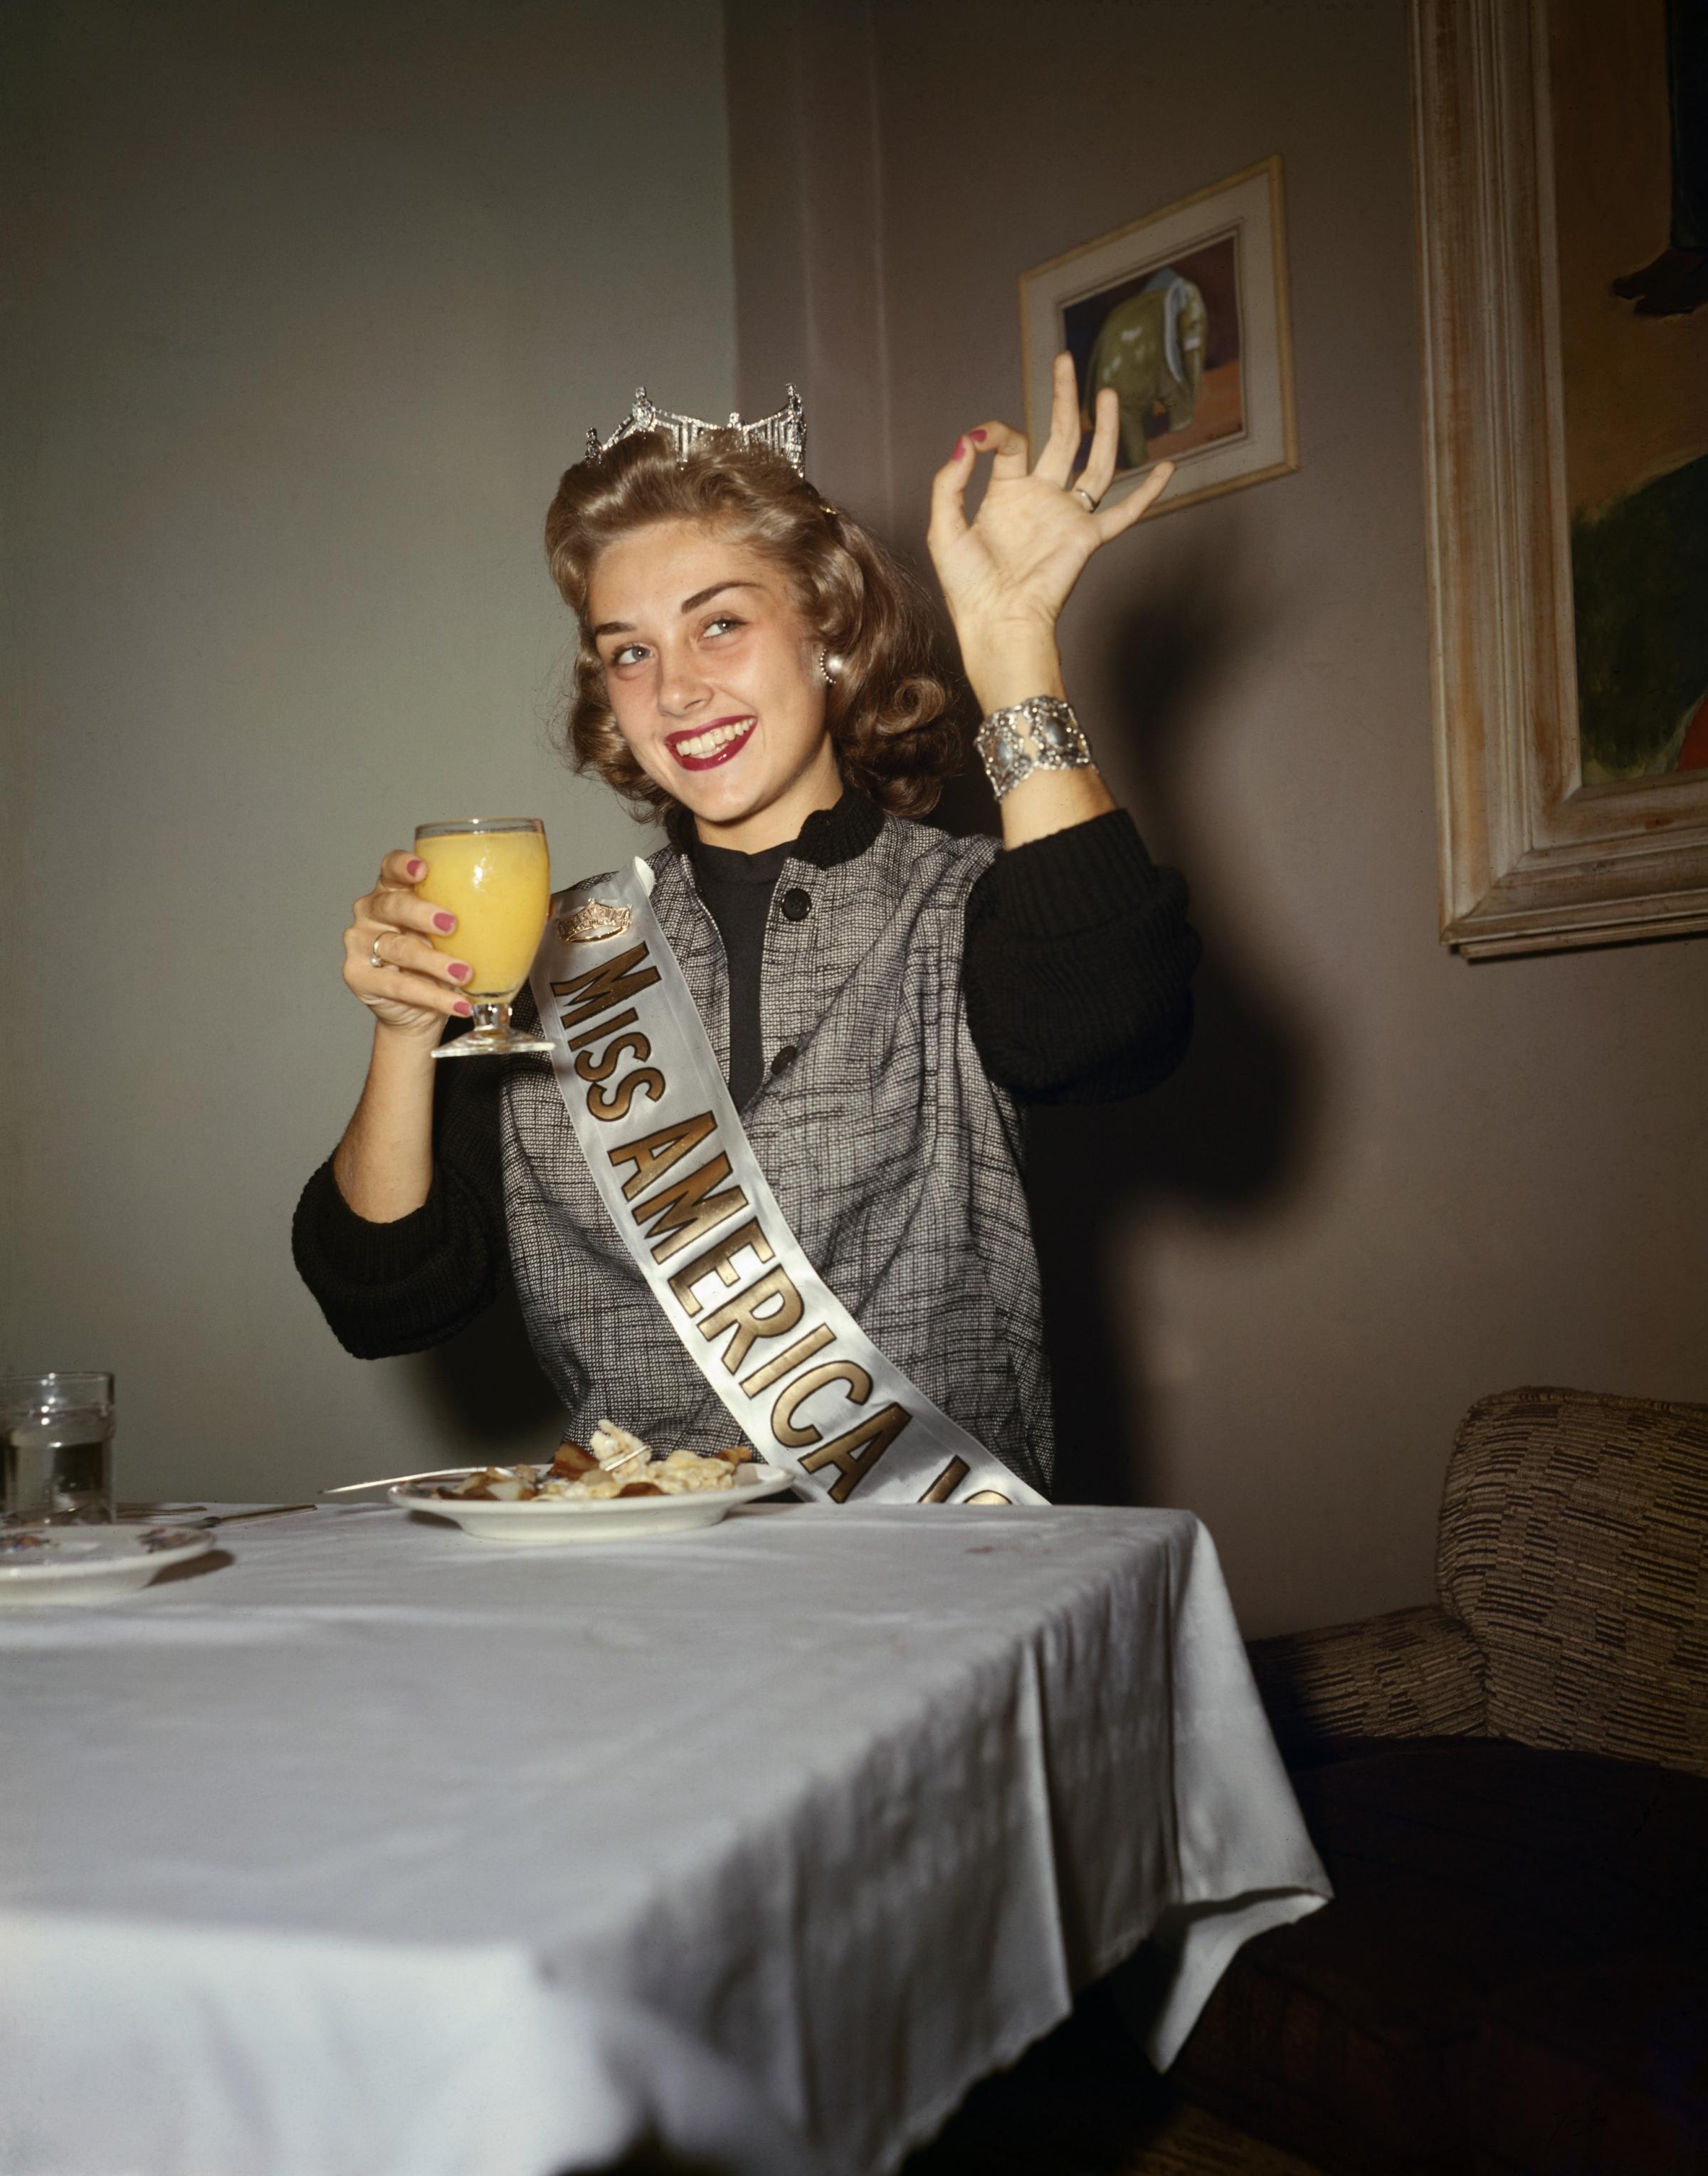 Mary Ann McKnight with Glass of Orange Juice